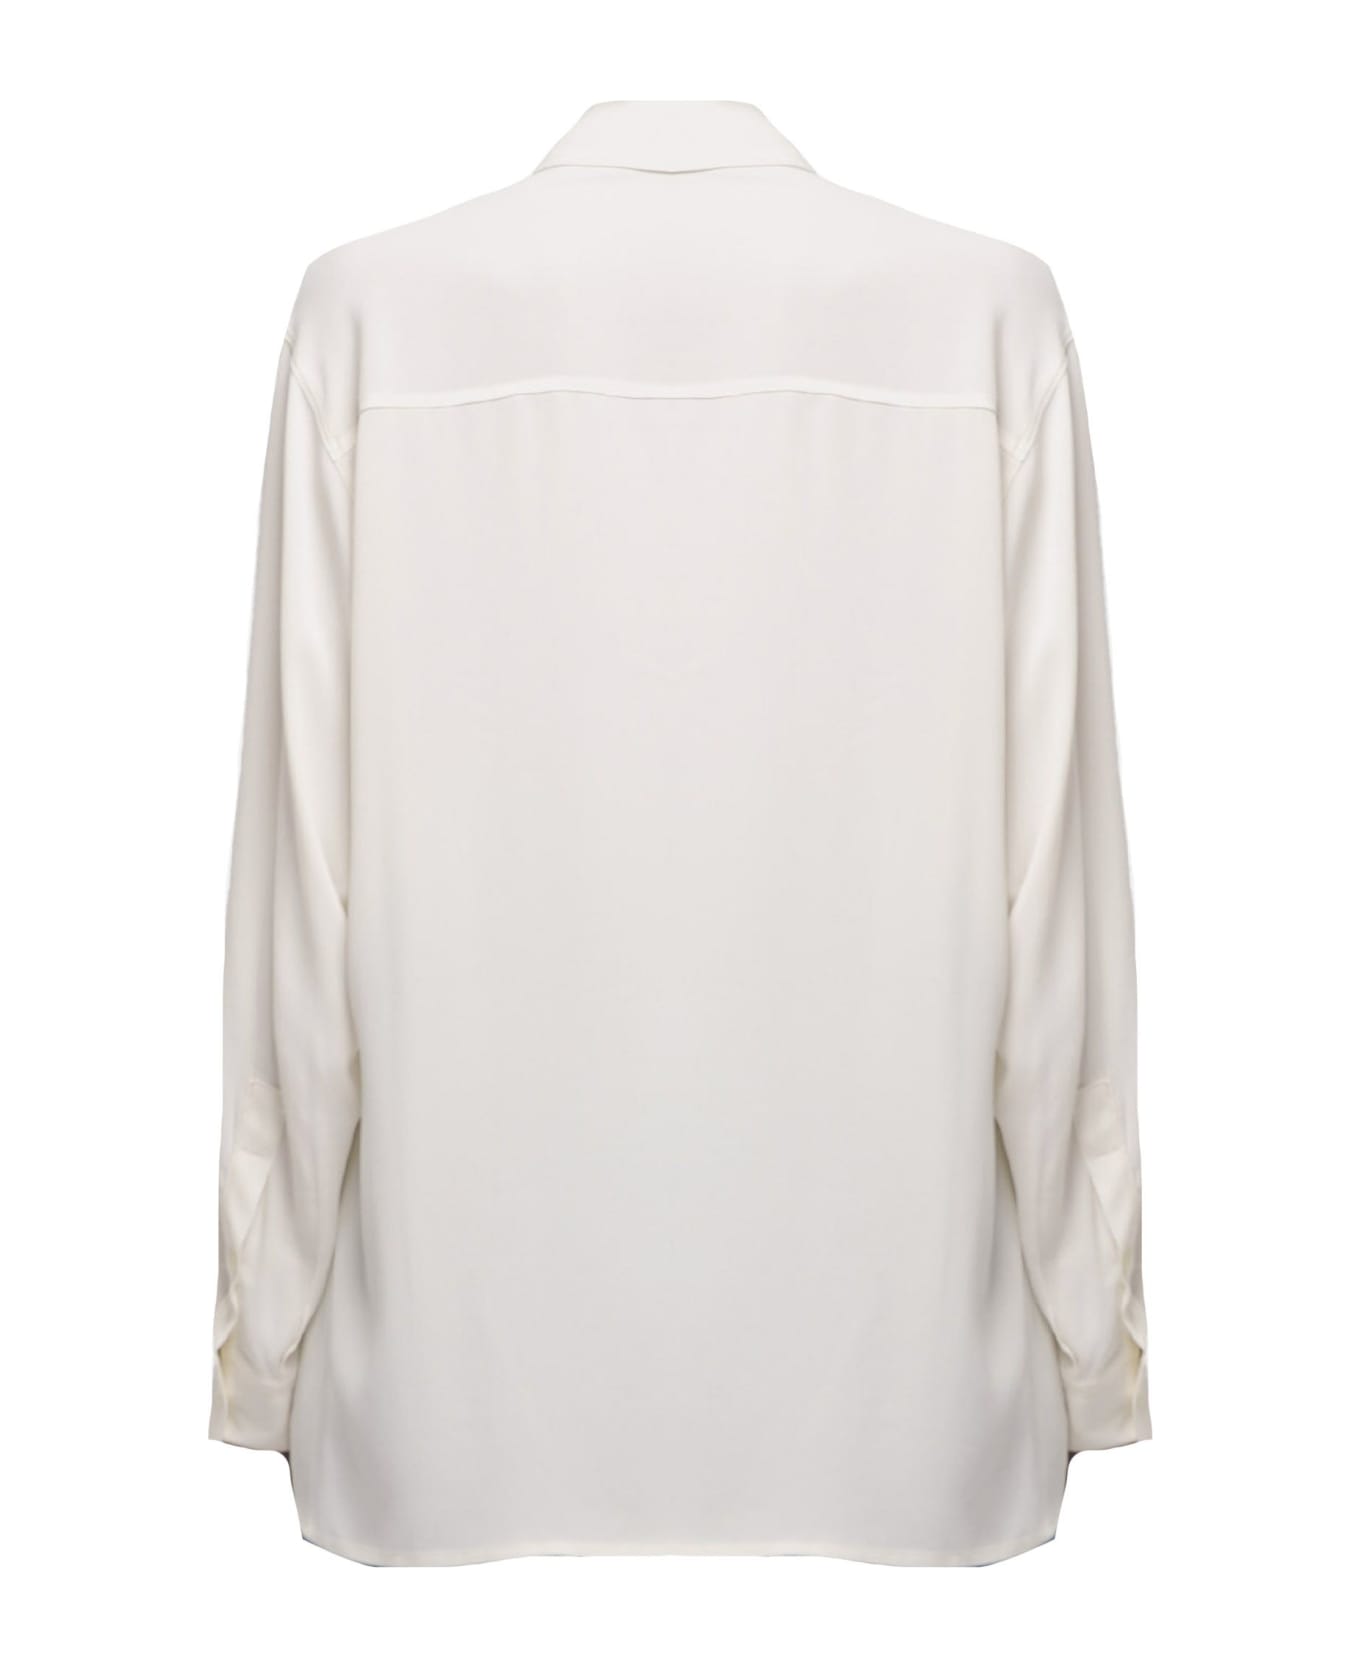 SEMICOUTURE Cream Silk Crepe Shirt - White